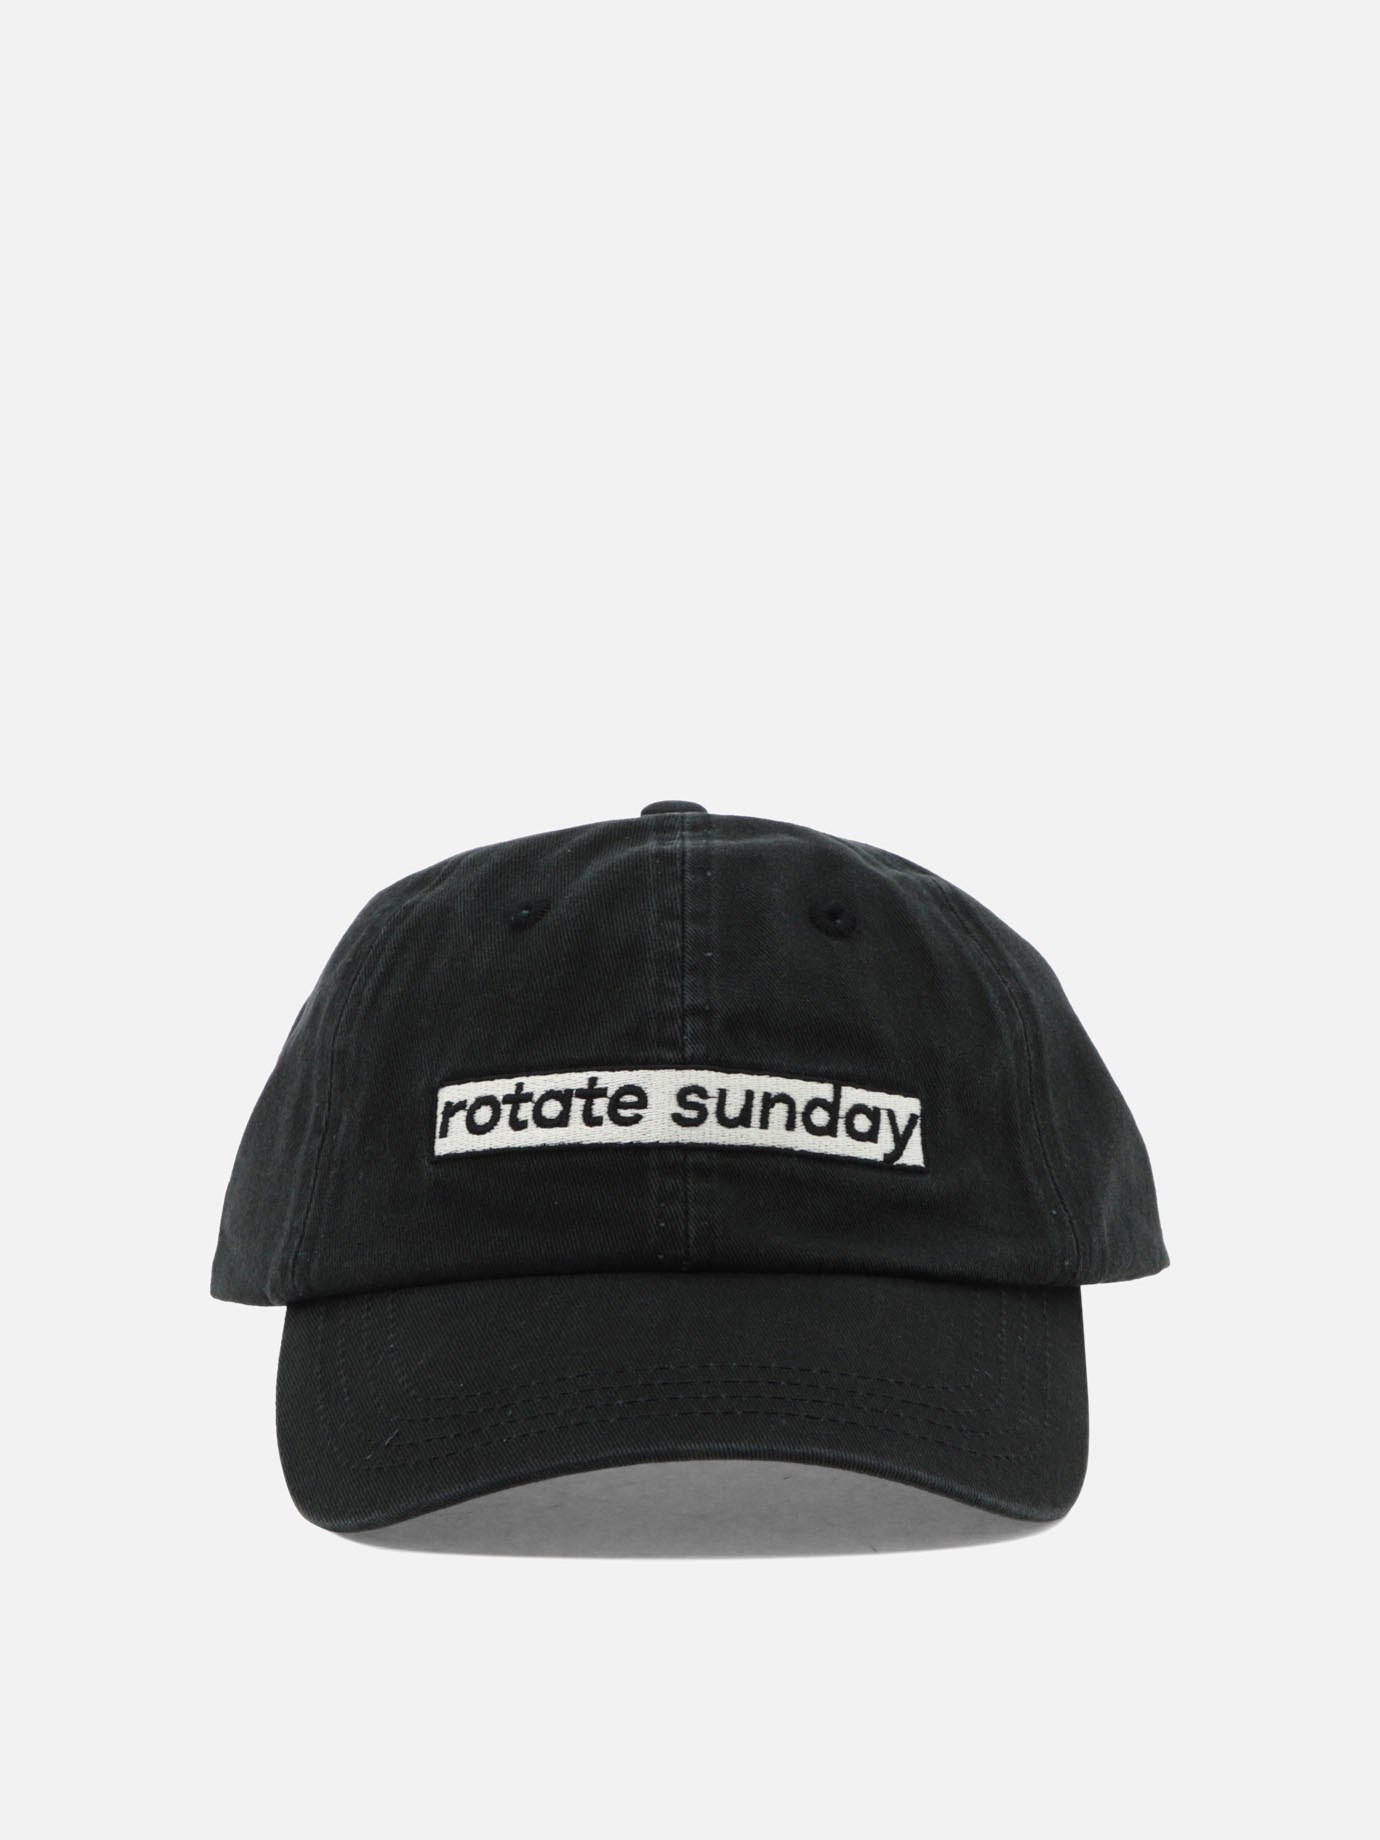  Rotate Sunday  baseball capby Rotate - 4